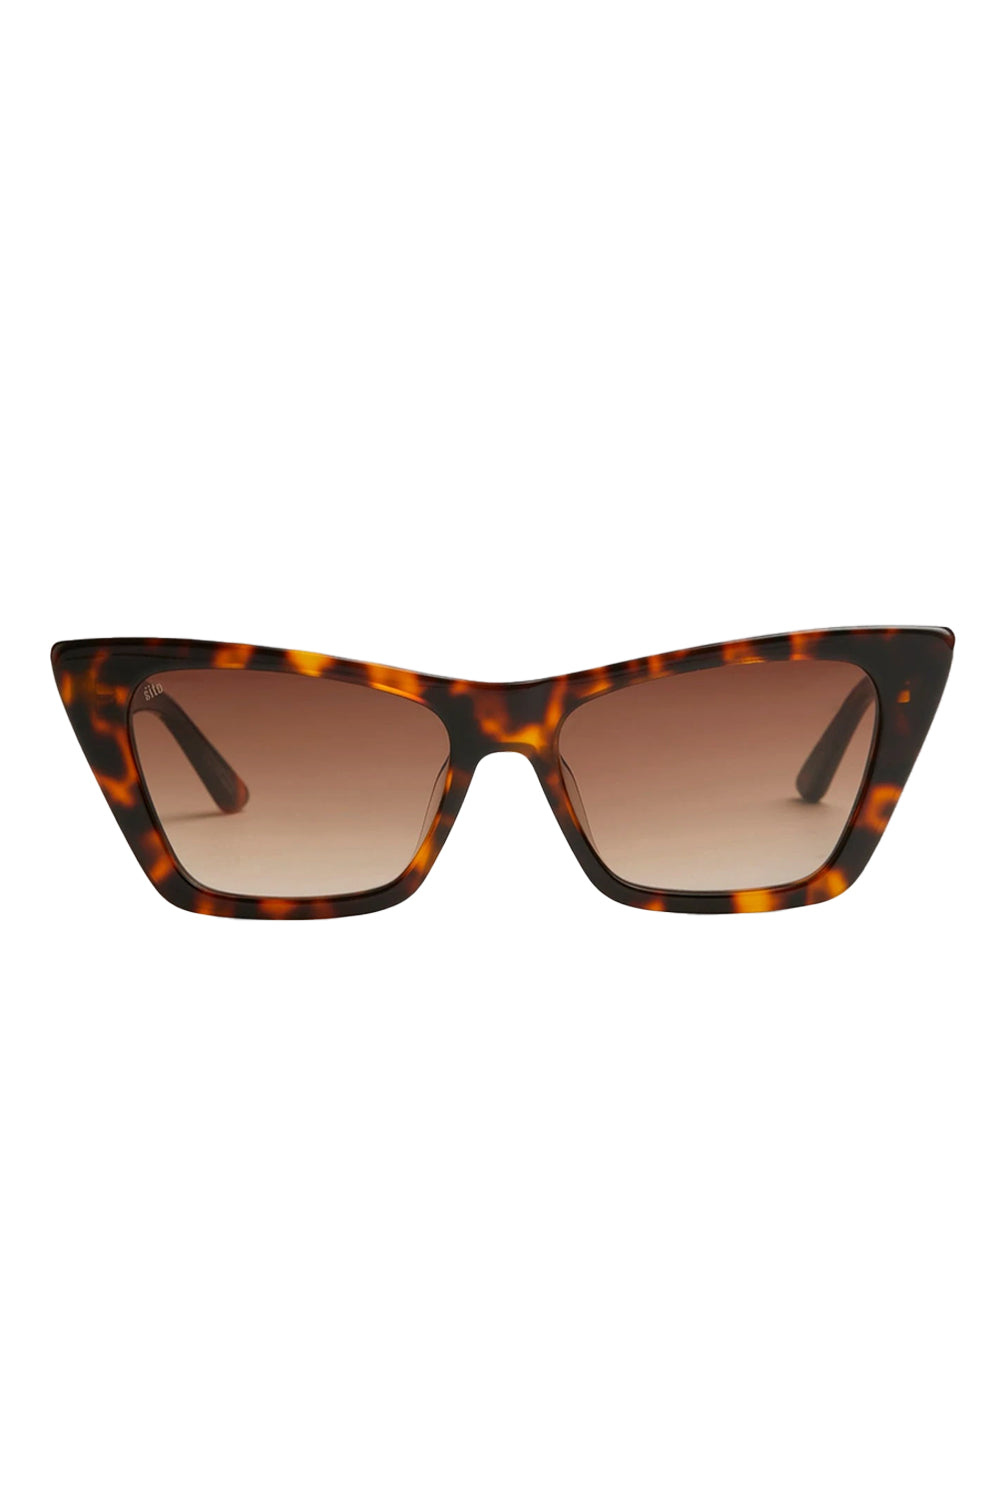 Sito Shades | Sito Wonderland Sunglasses